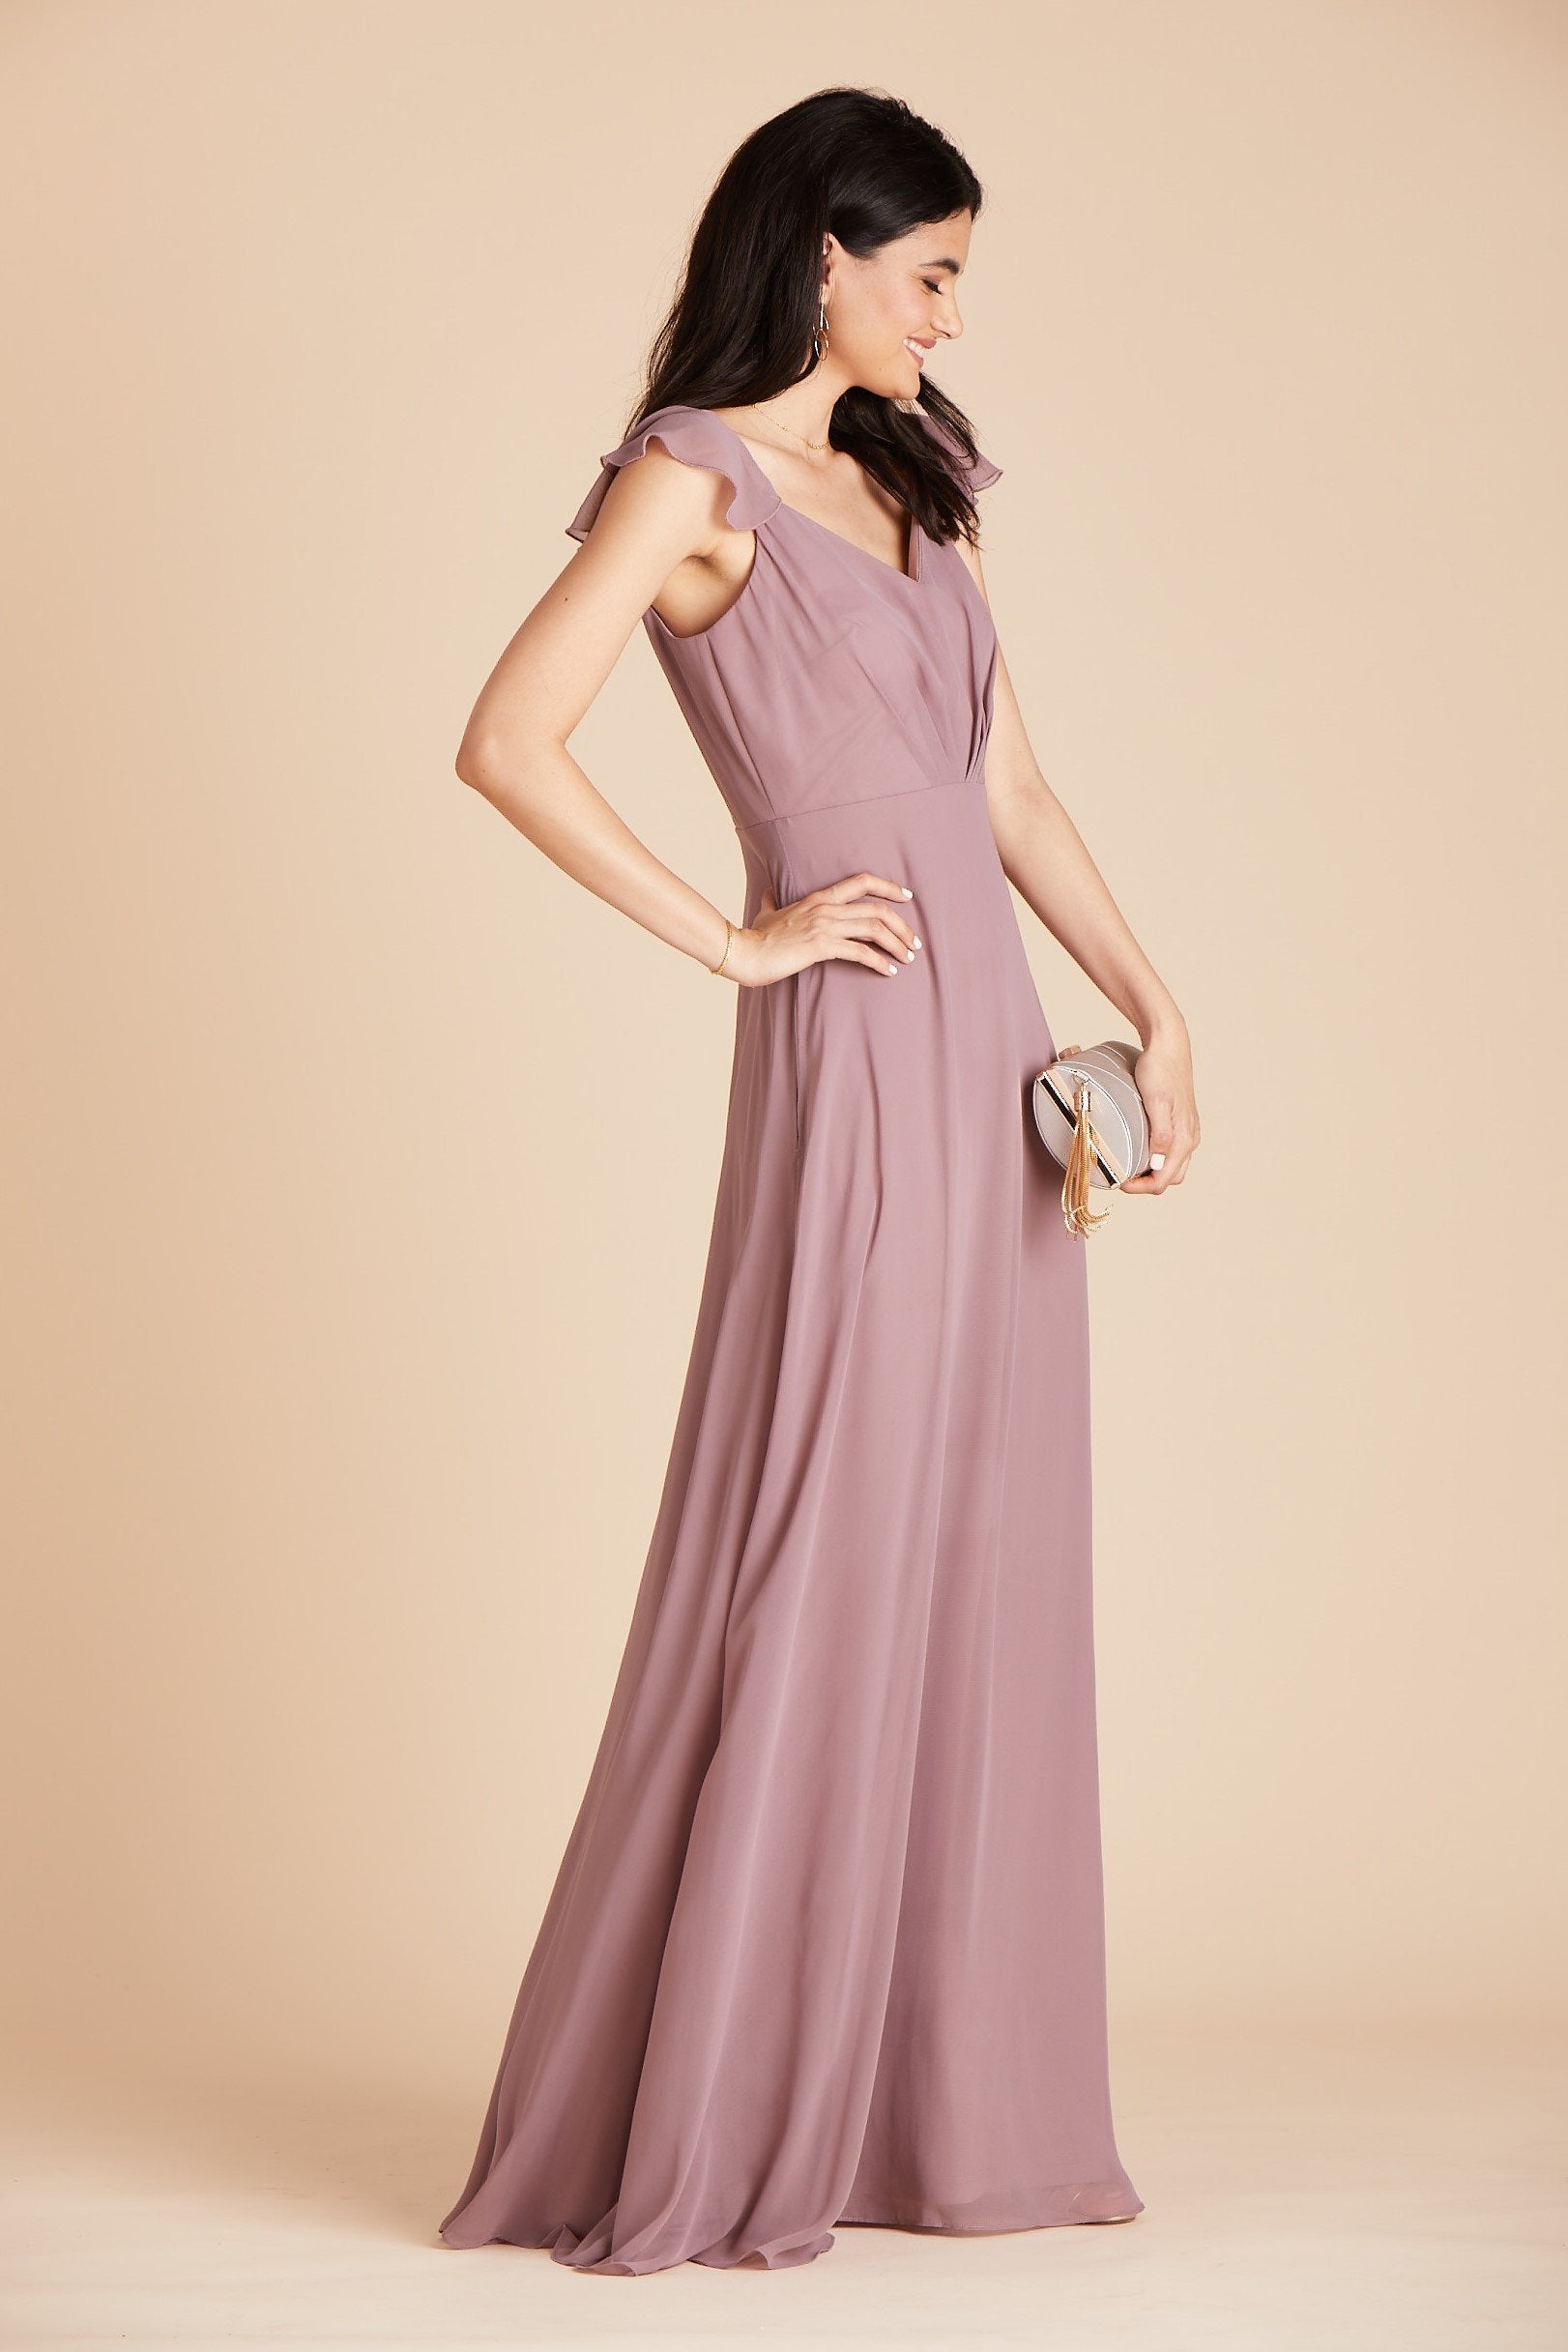 Kae bridesmaids dress in dark mauve purple chiffon by Birdy Grey, side view